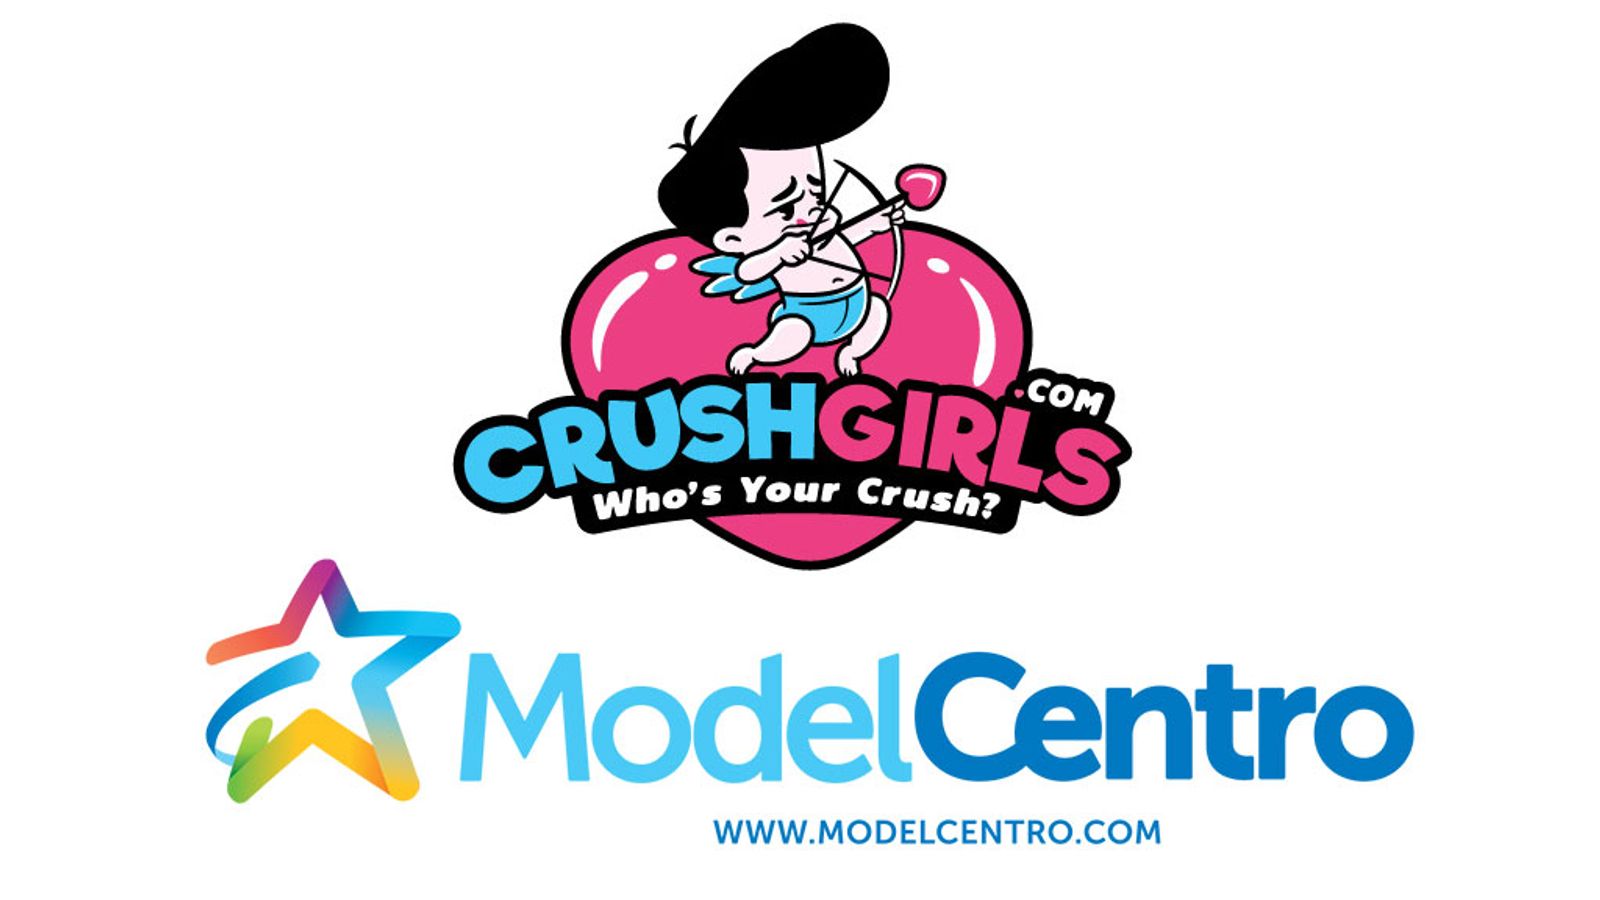 Crush Girls Announces New Affiliate Program